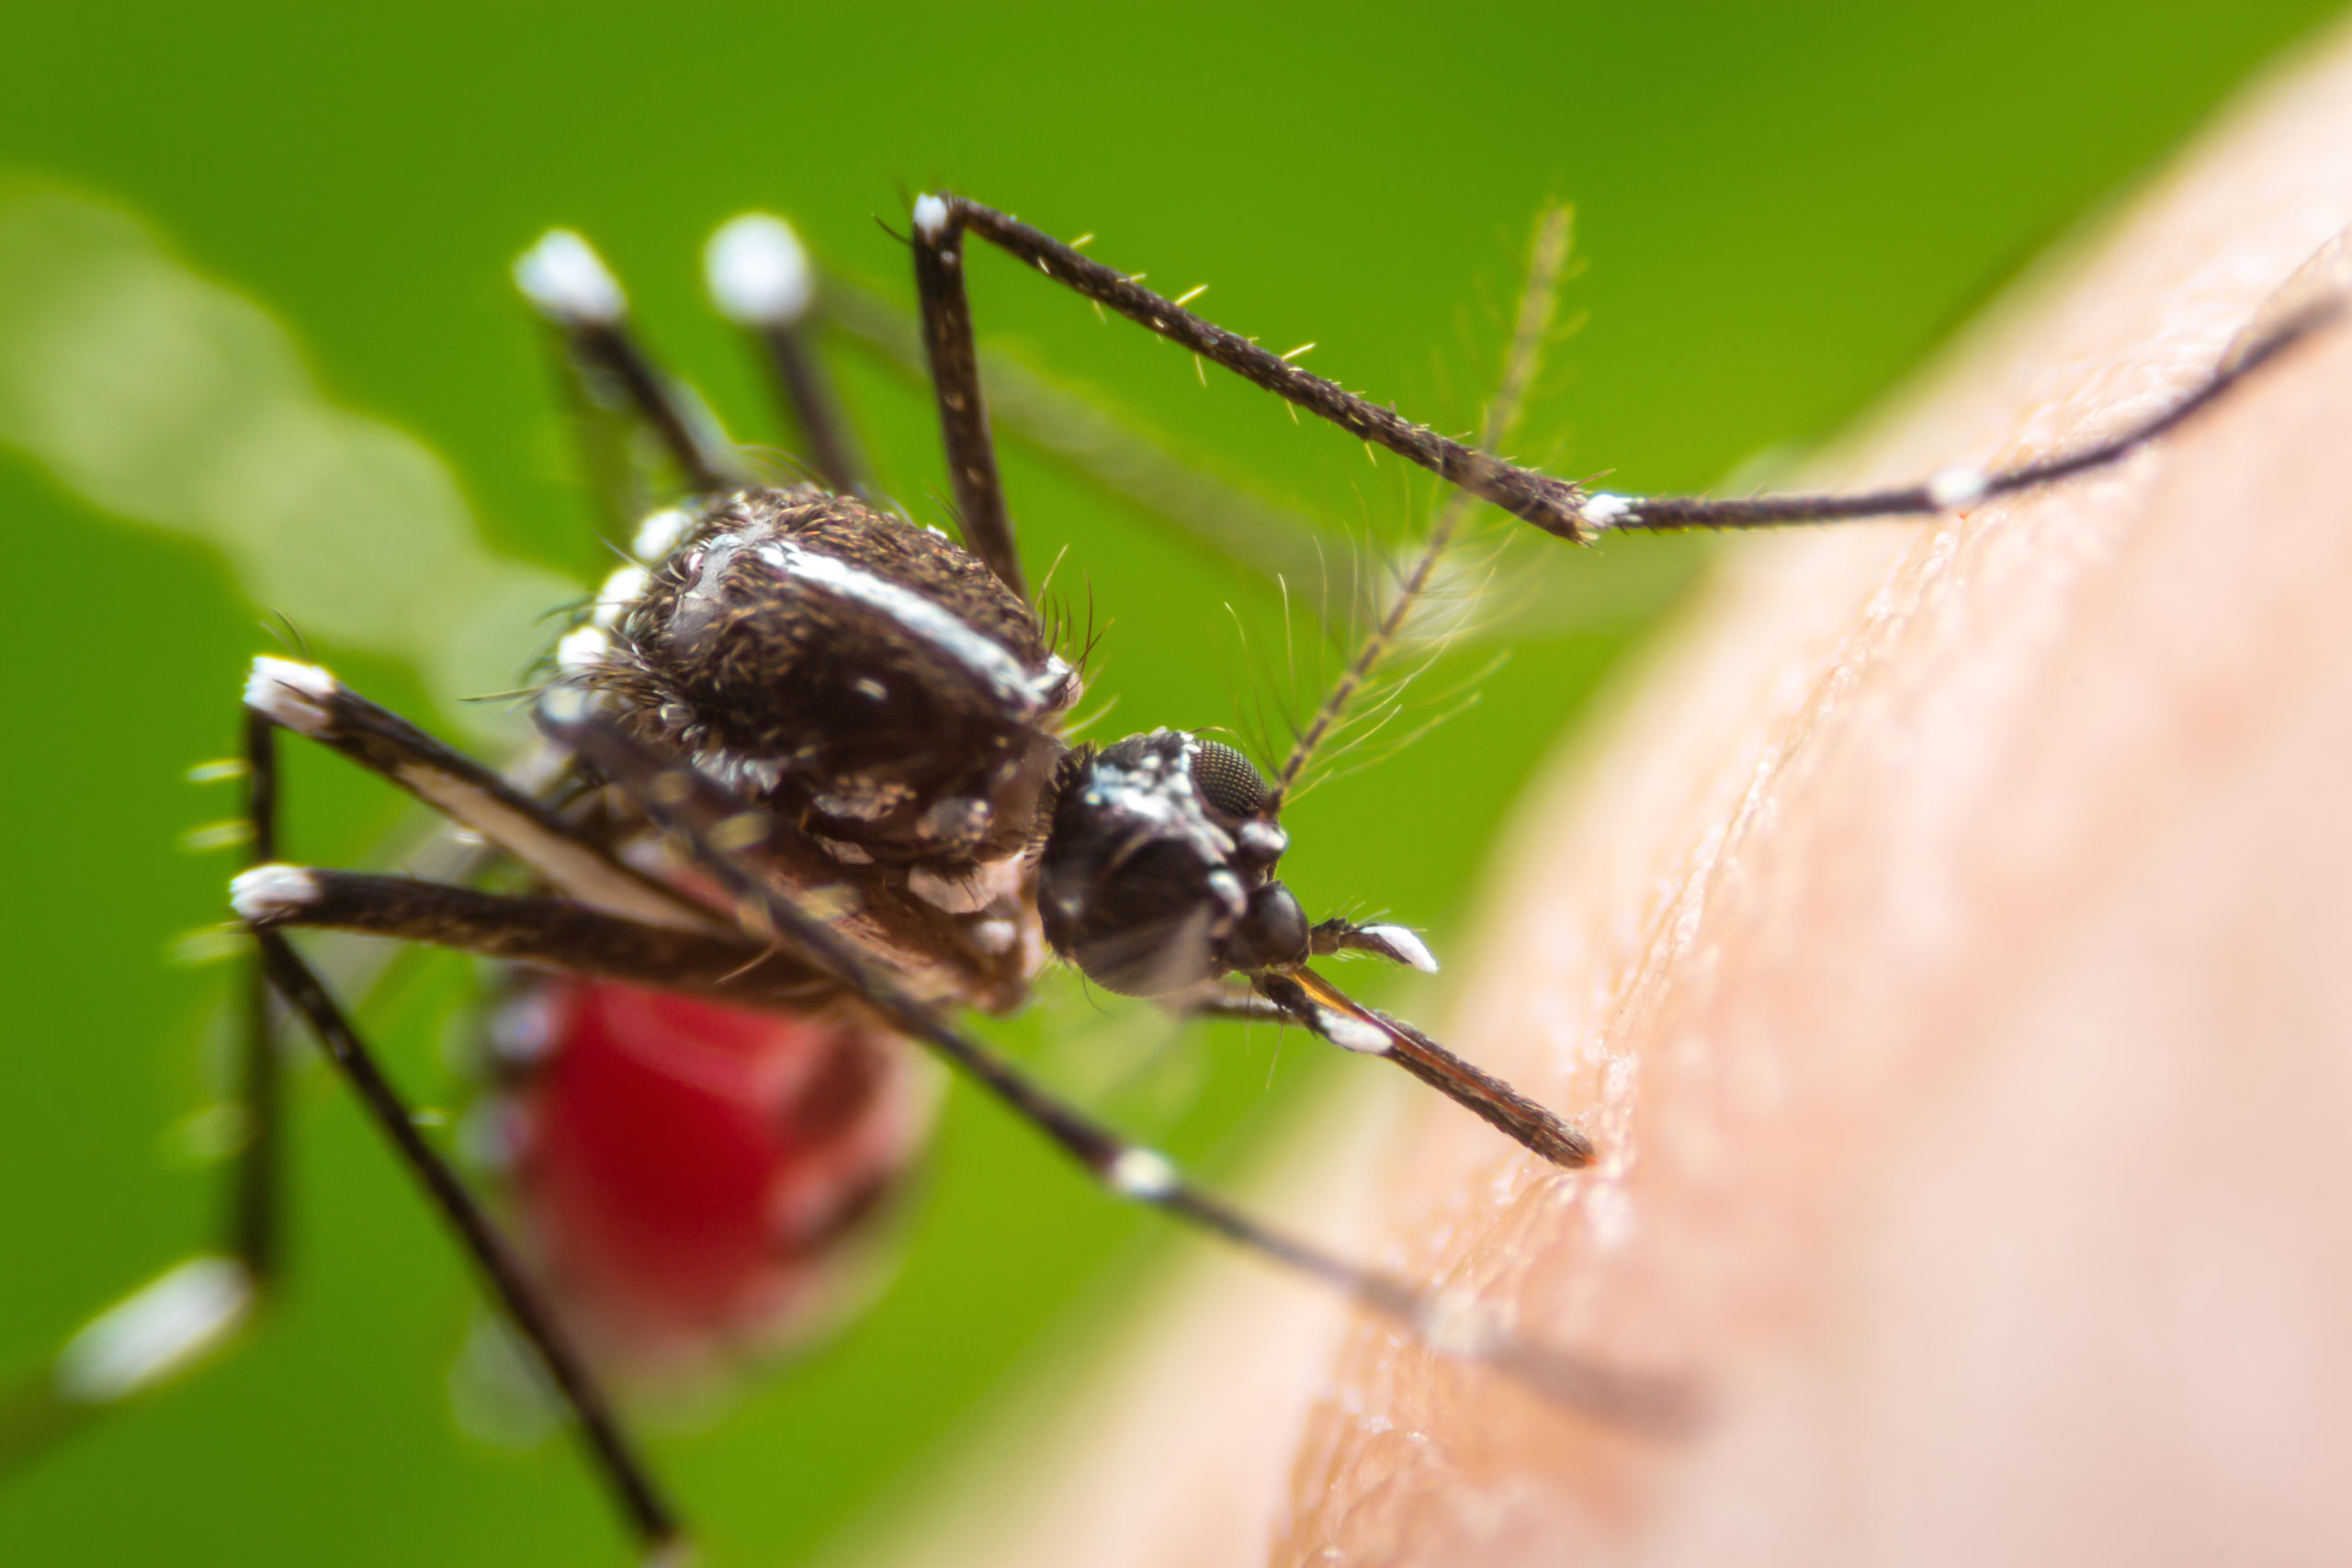 Striped mosquito feeding on human skin